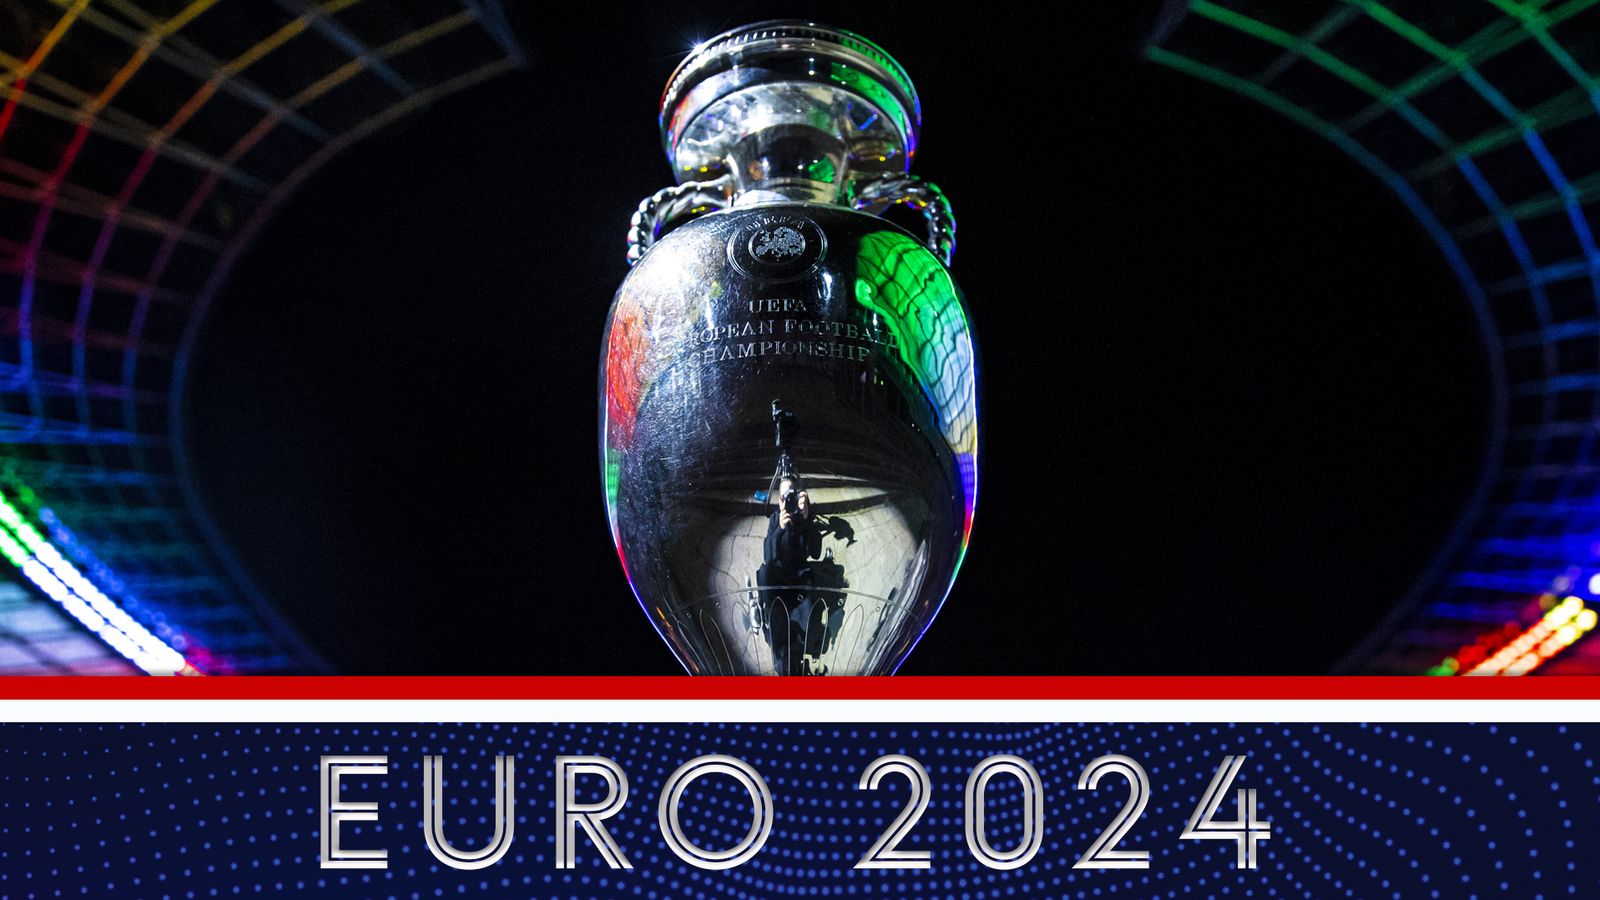 Polish Football Season 2022/23 - Page 2 - UEFA European Football Forum